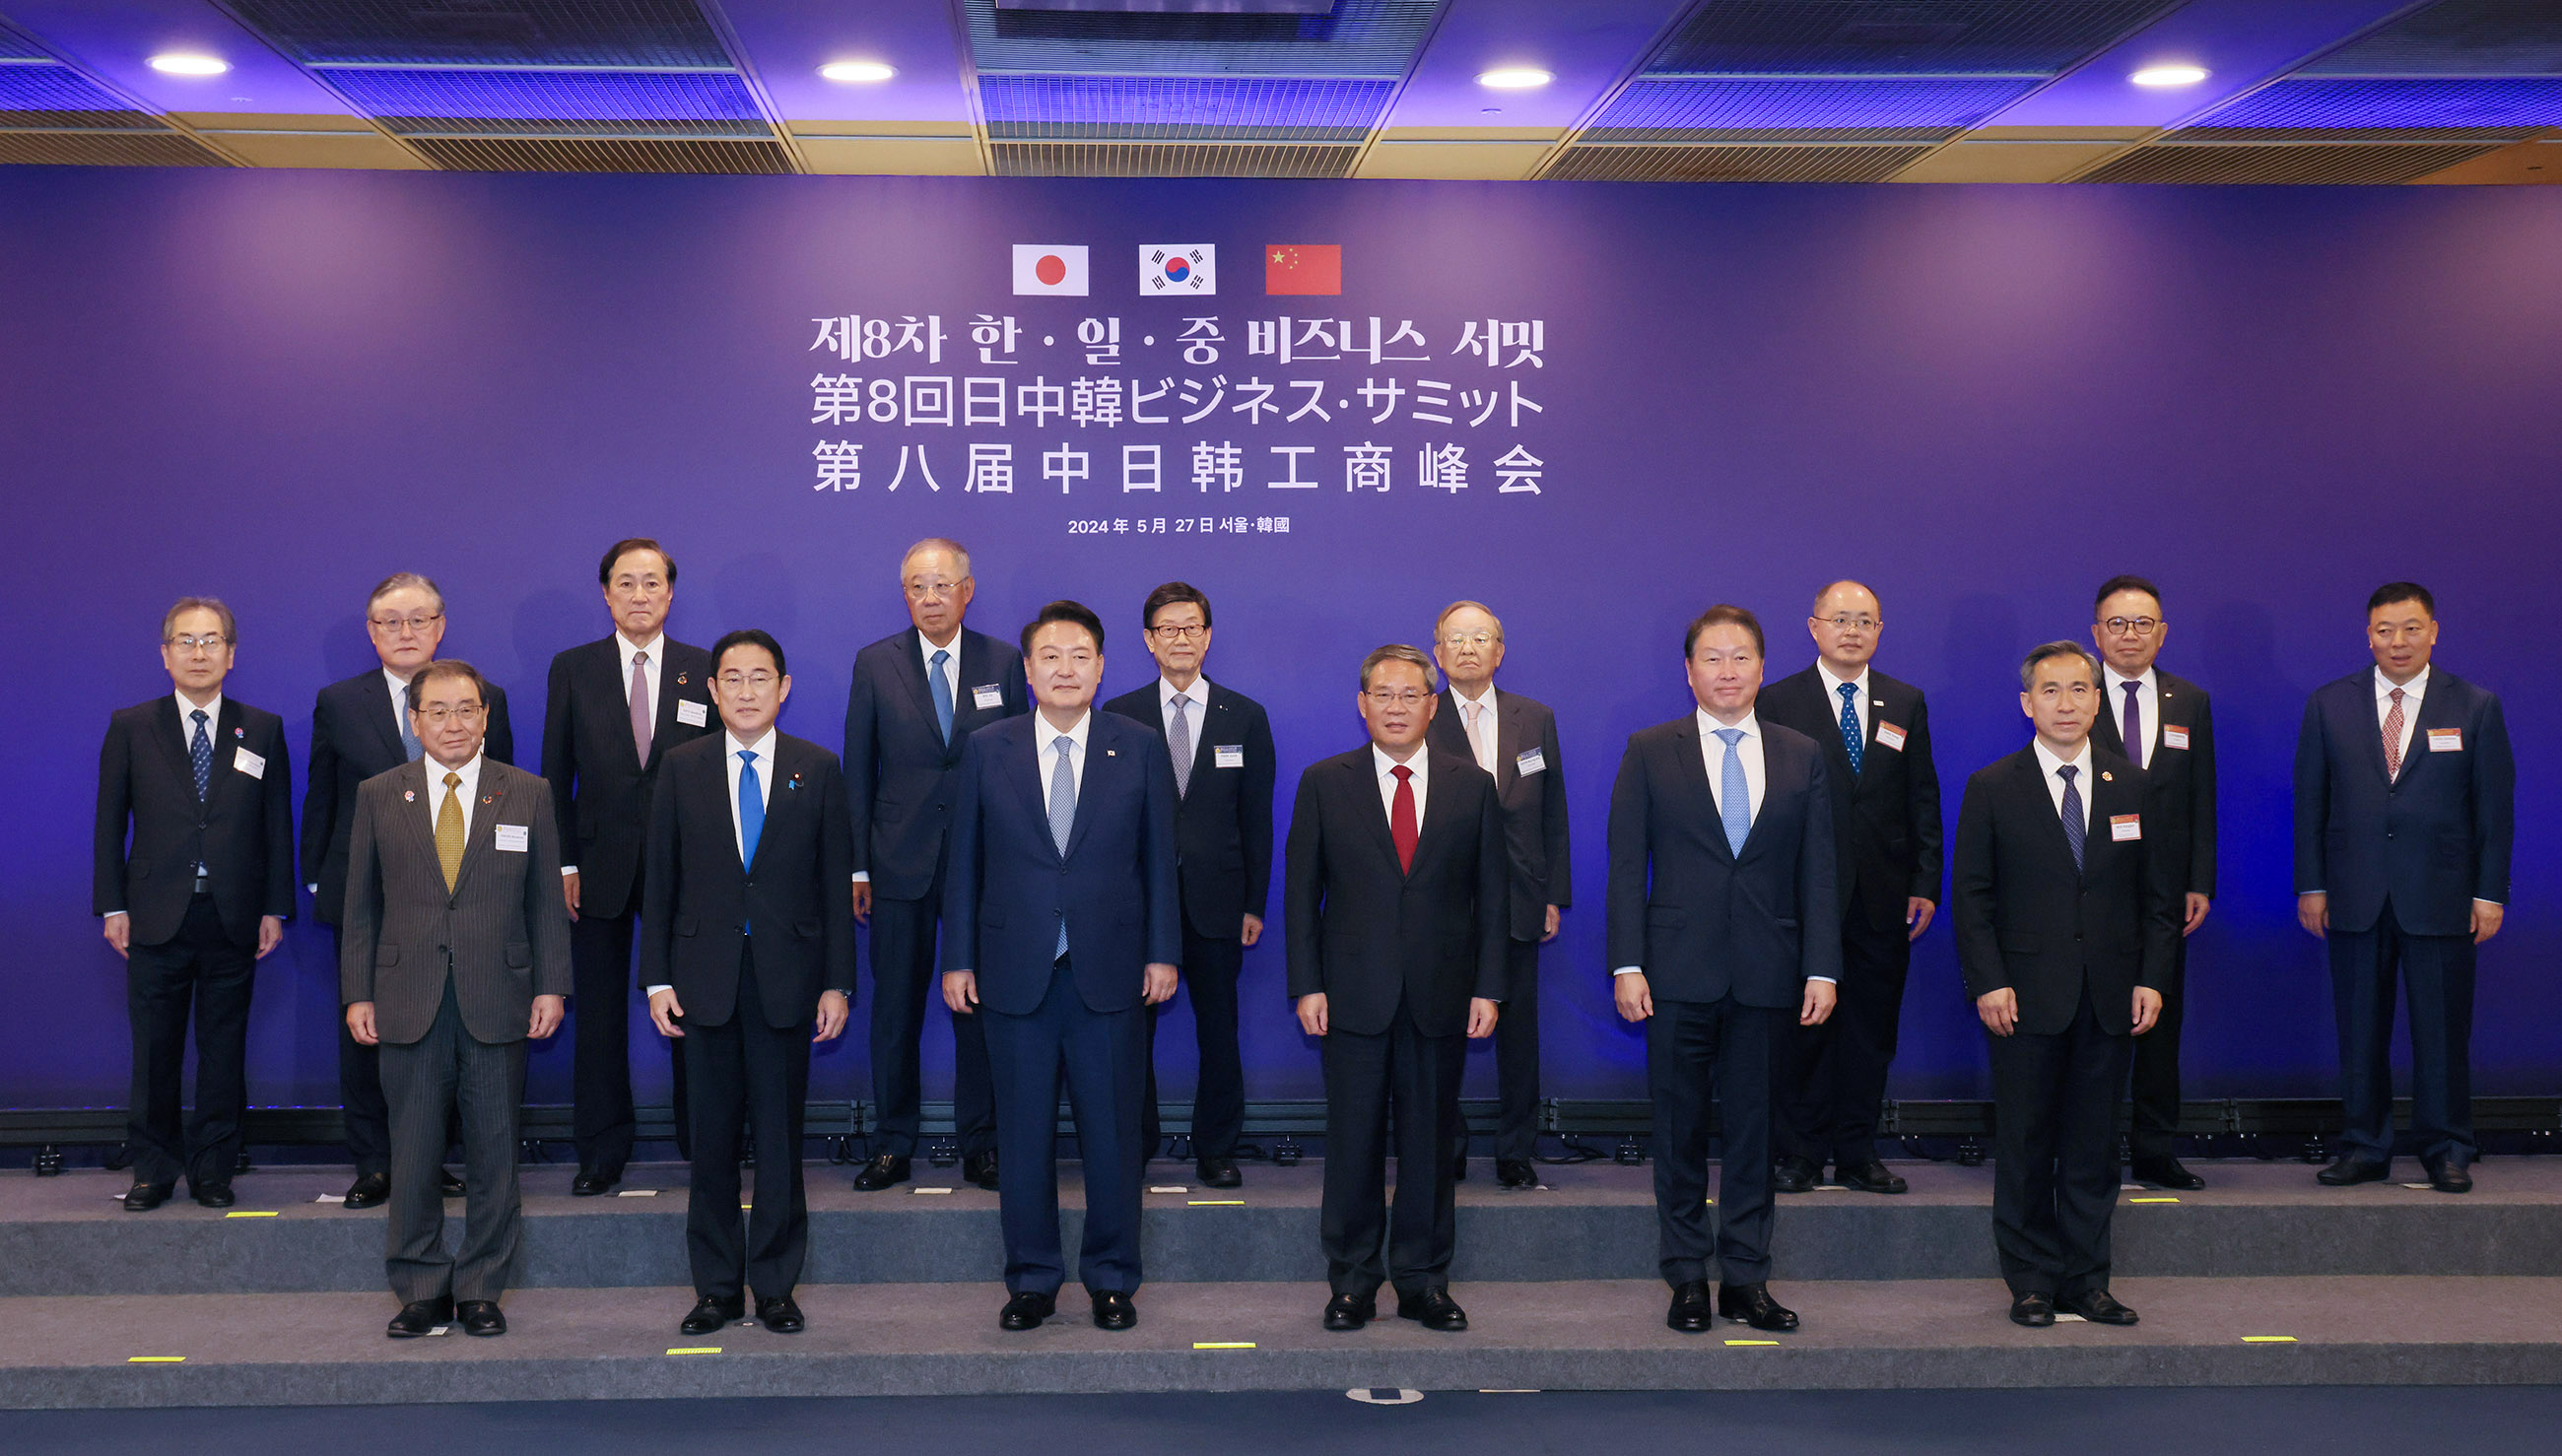 Prime Minister Kishida attending the Japan-China-ROK Business Summit (2)